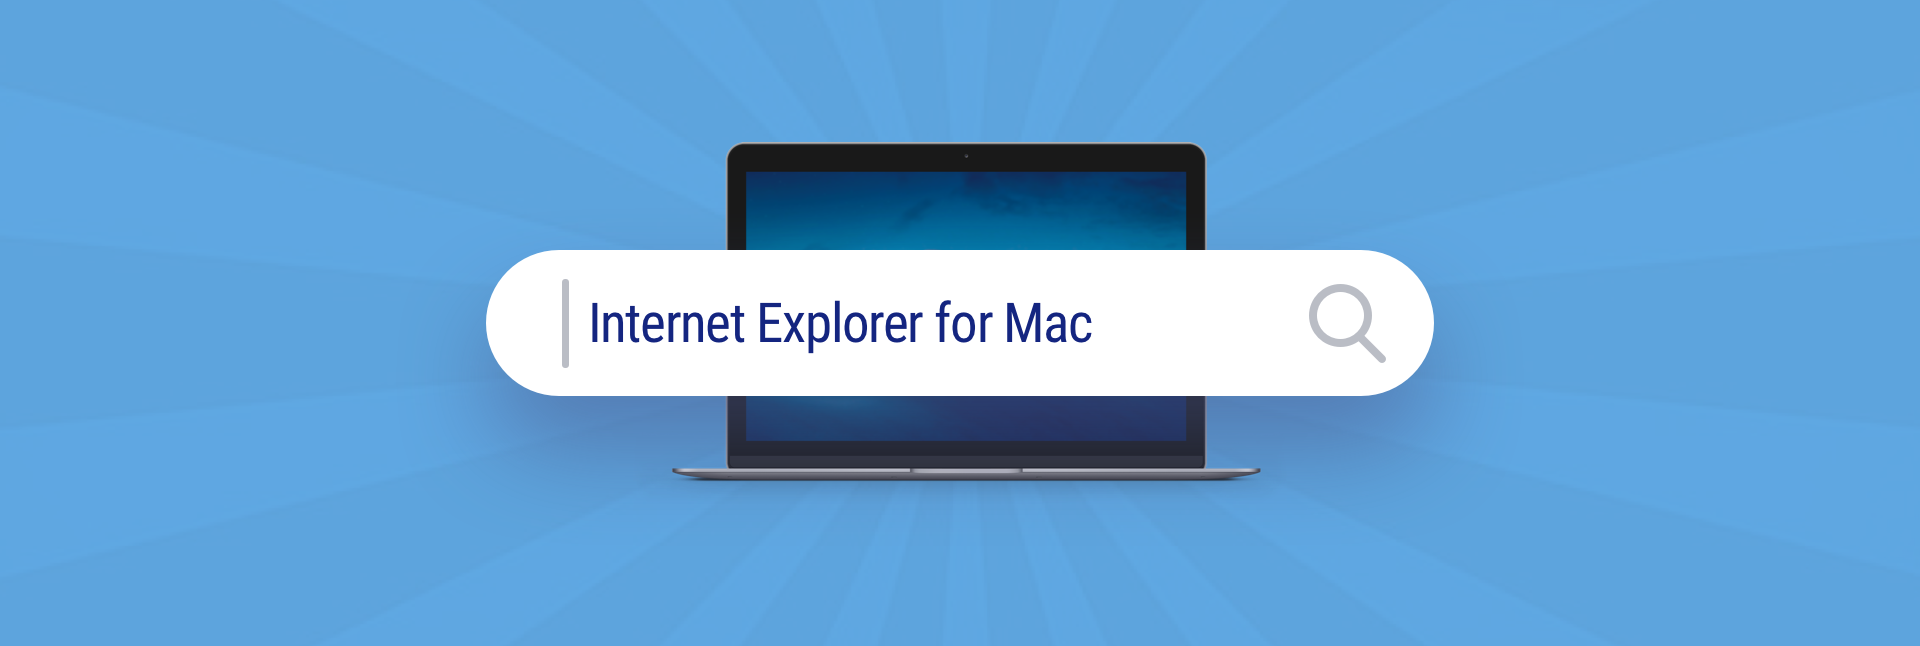 explorer for mac download free